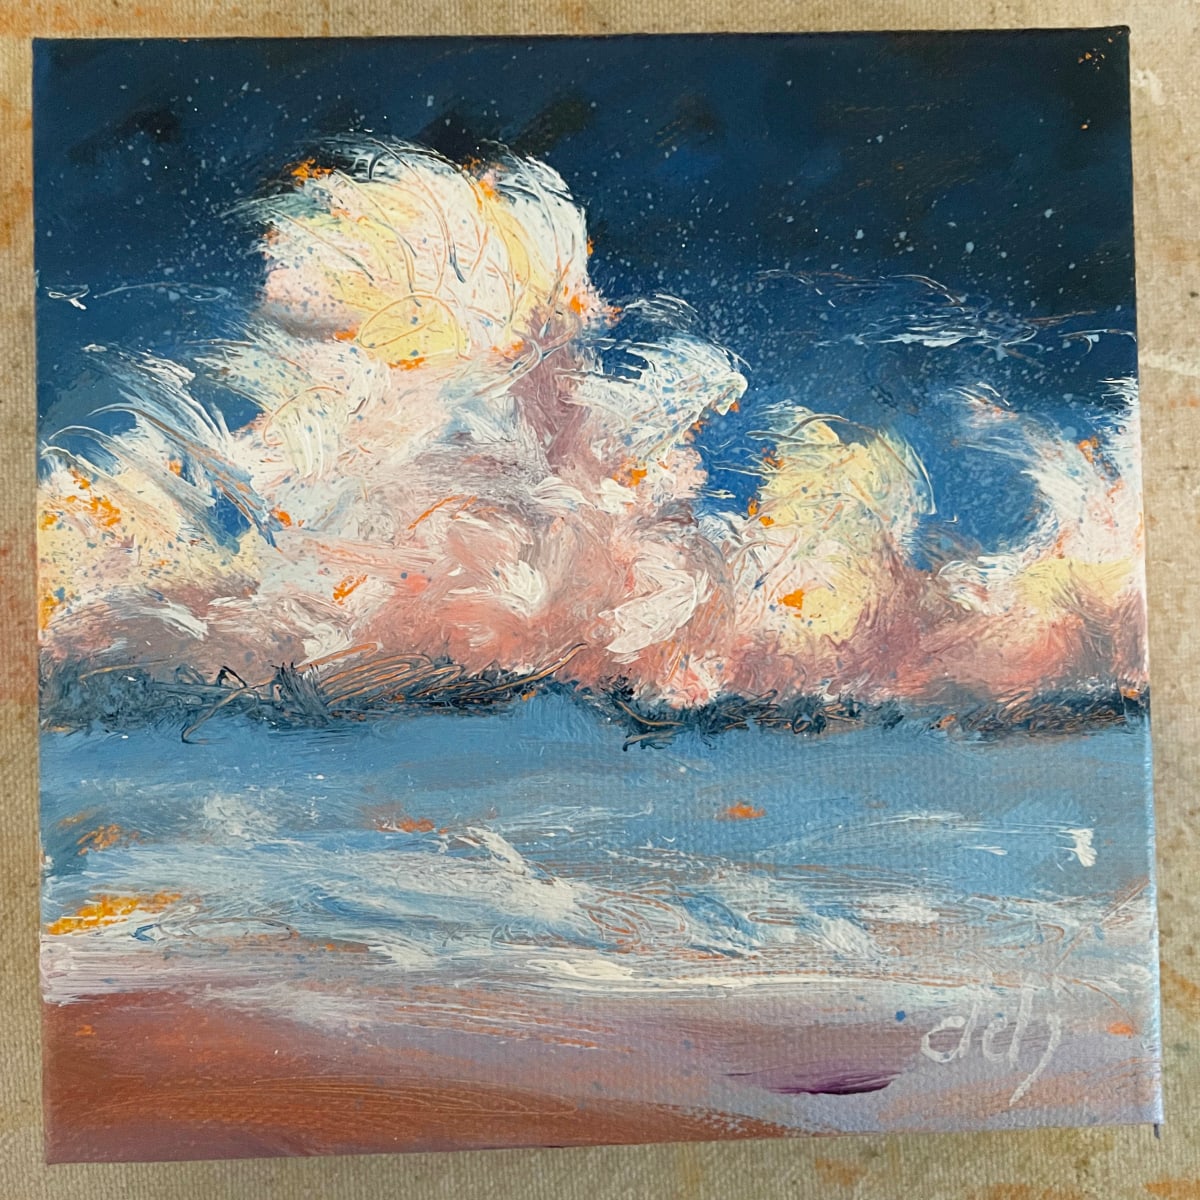 Cloudburst 12 by Daryl D. Johnson 